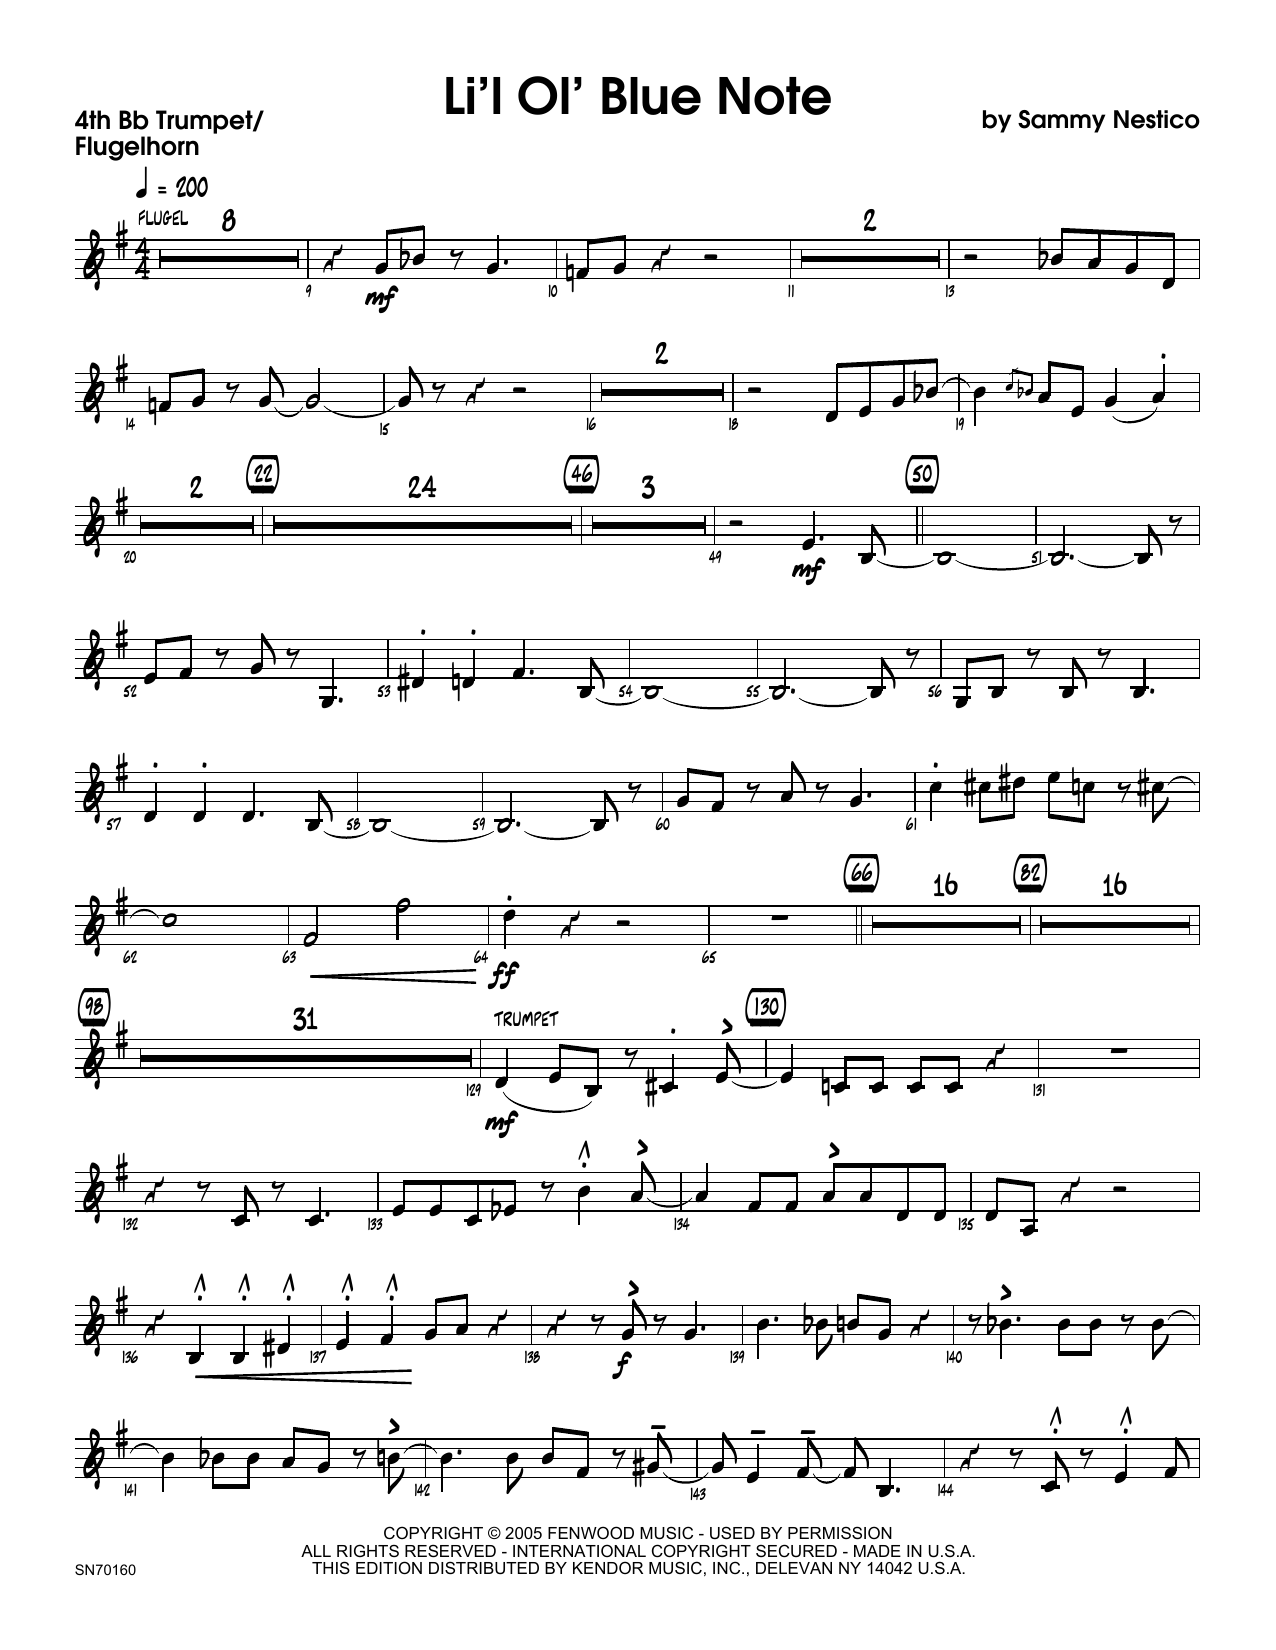 Download Sammy Nestico Li'l Ol' Blue Note - 4th Bb Trumpet Sheet Music